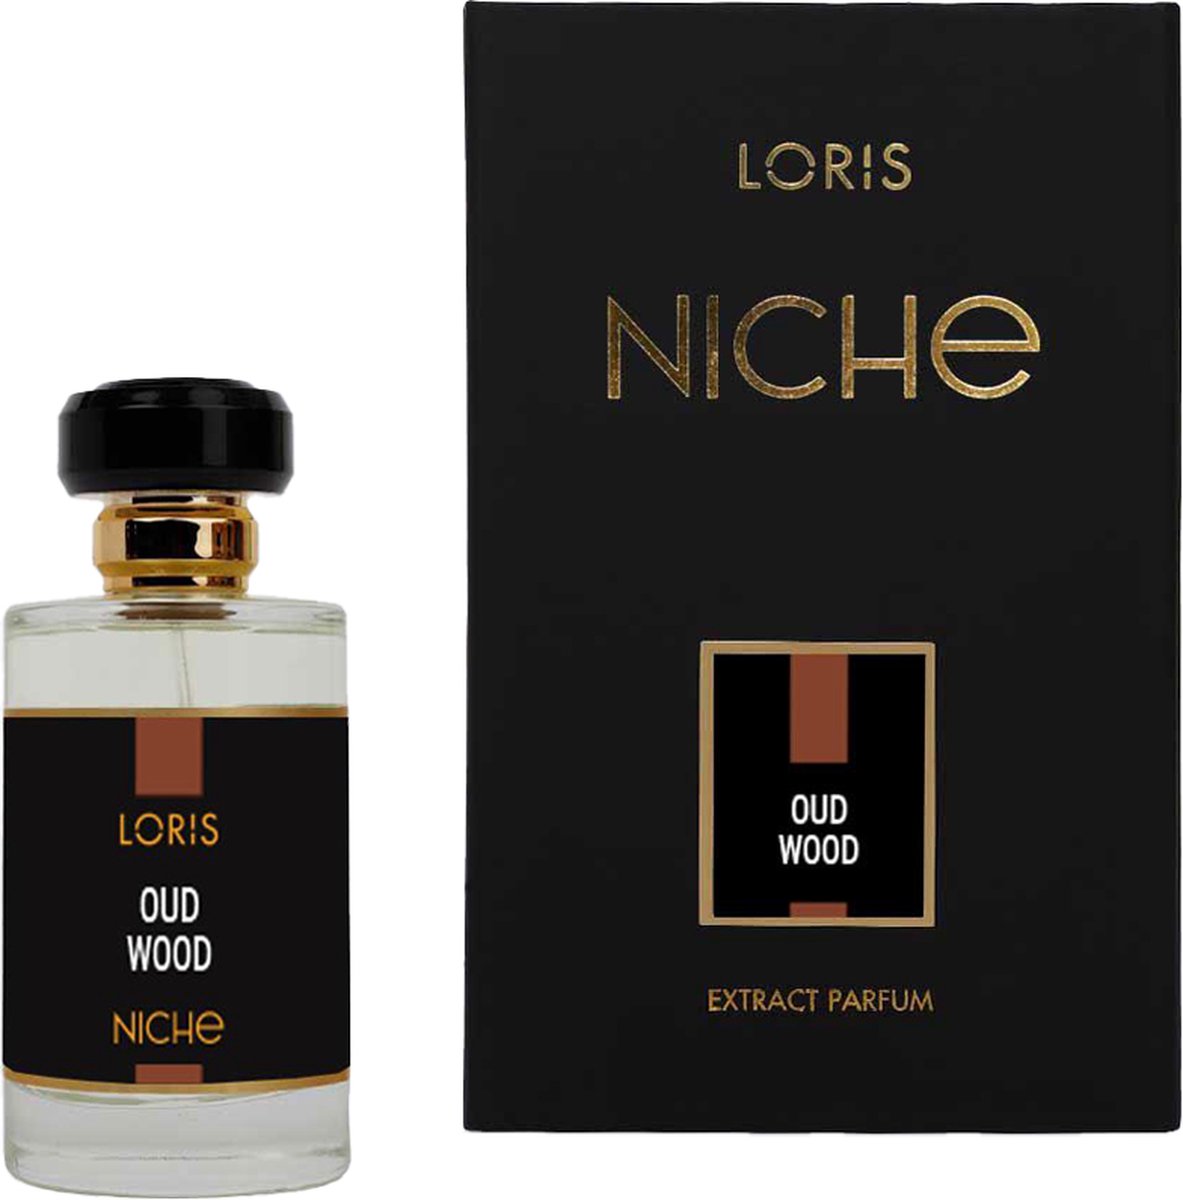 Loris - Extract Parfum - Oud Wood - Niche - 100 ml